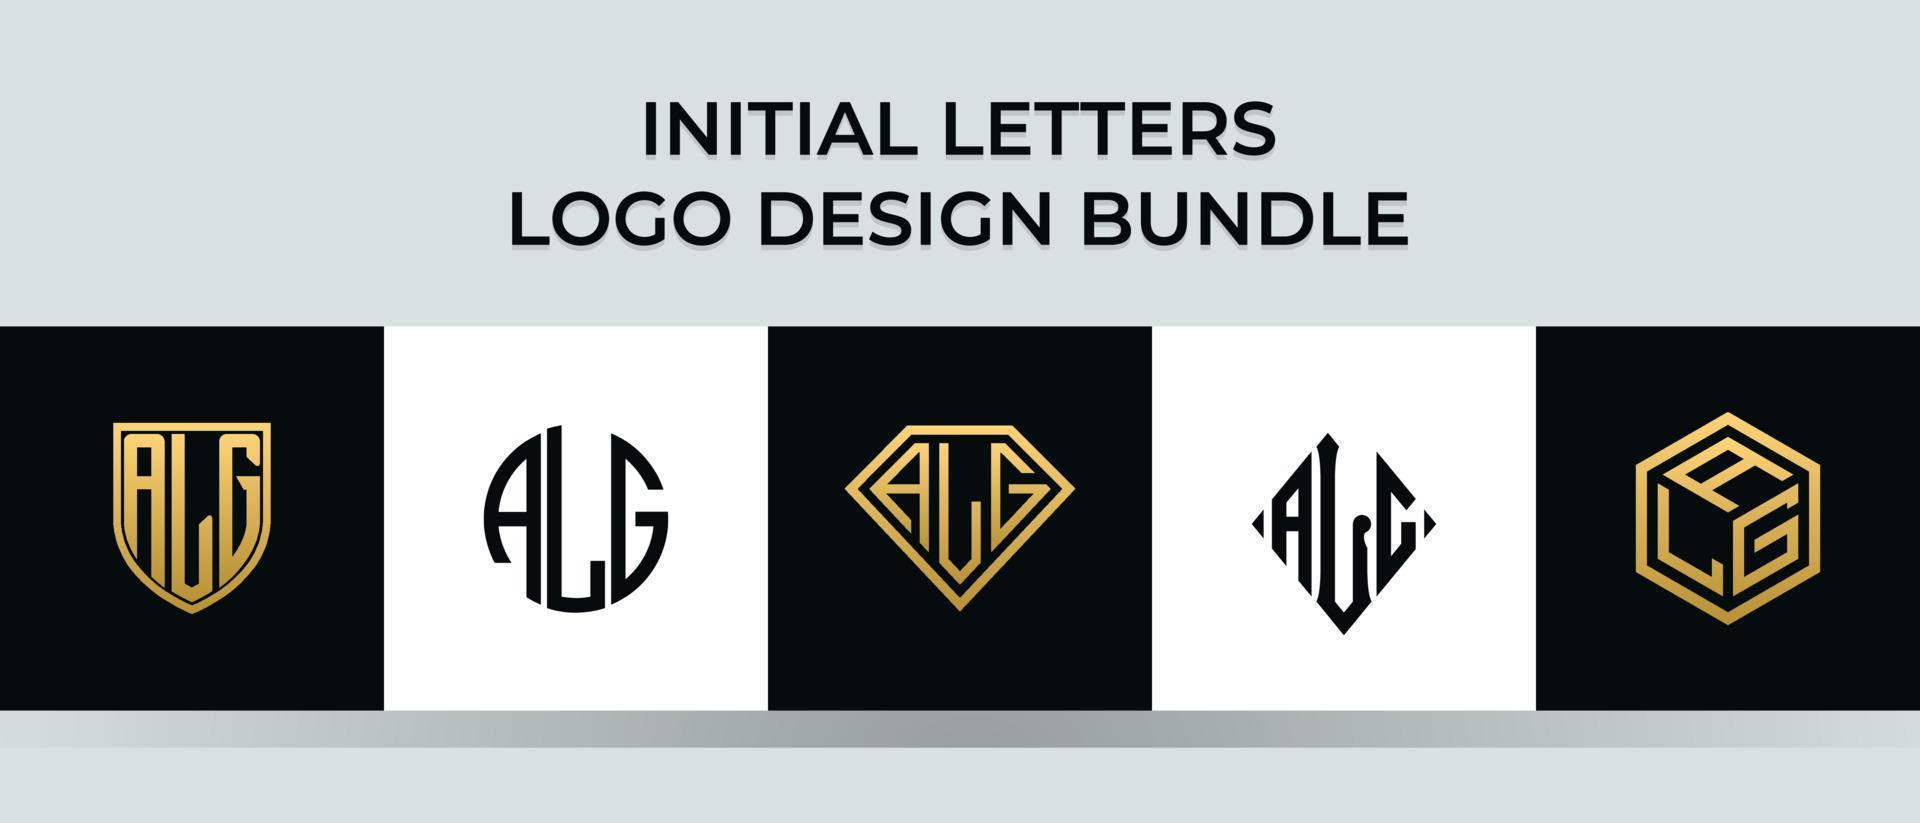 Initial letters ALG logo designs Bundle vector